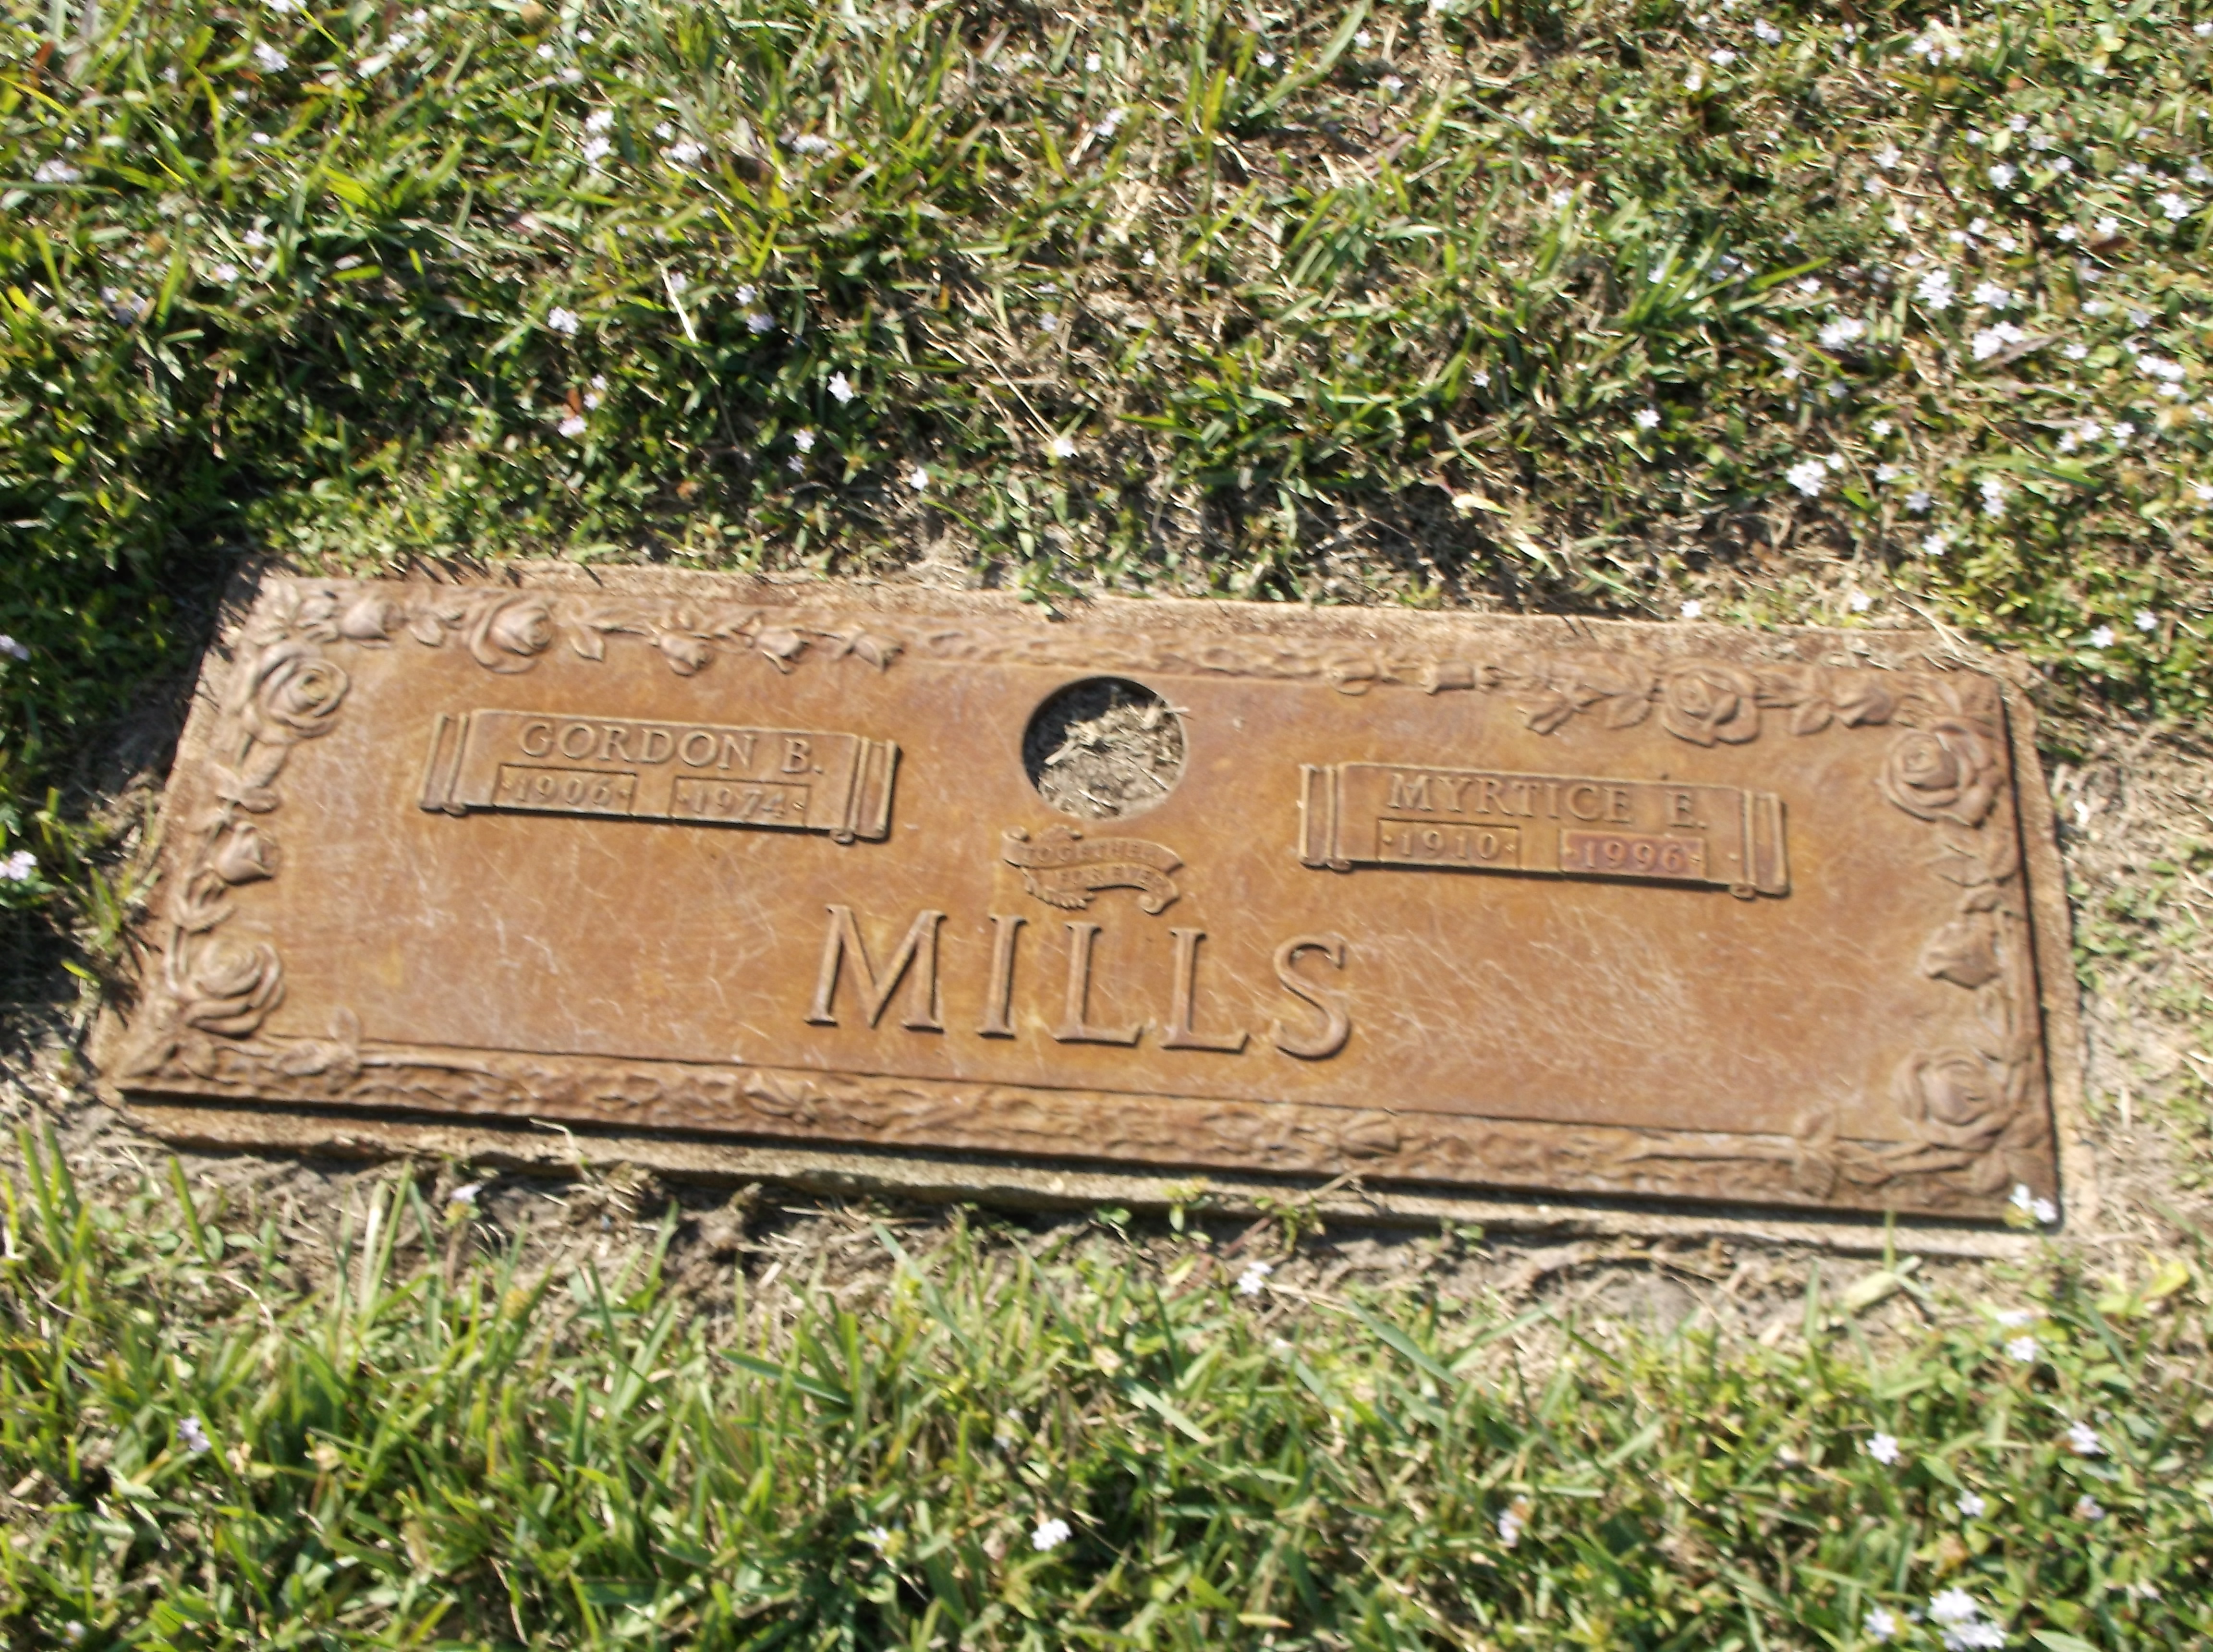 Myrtice E Mills